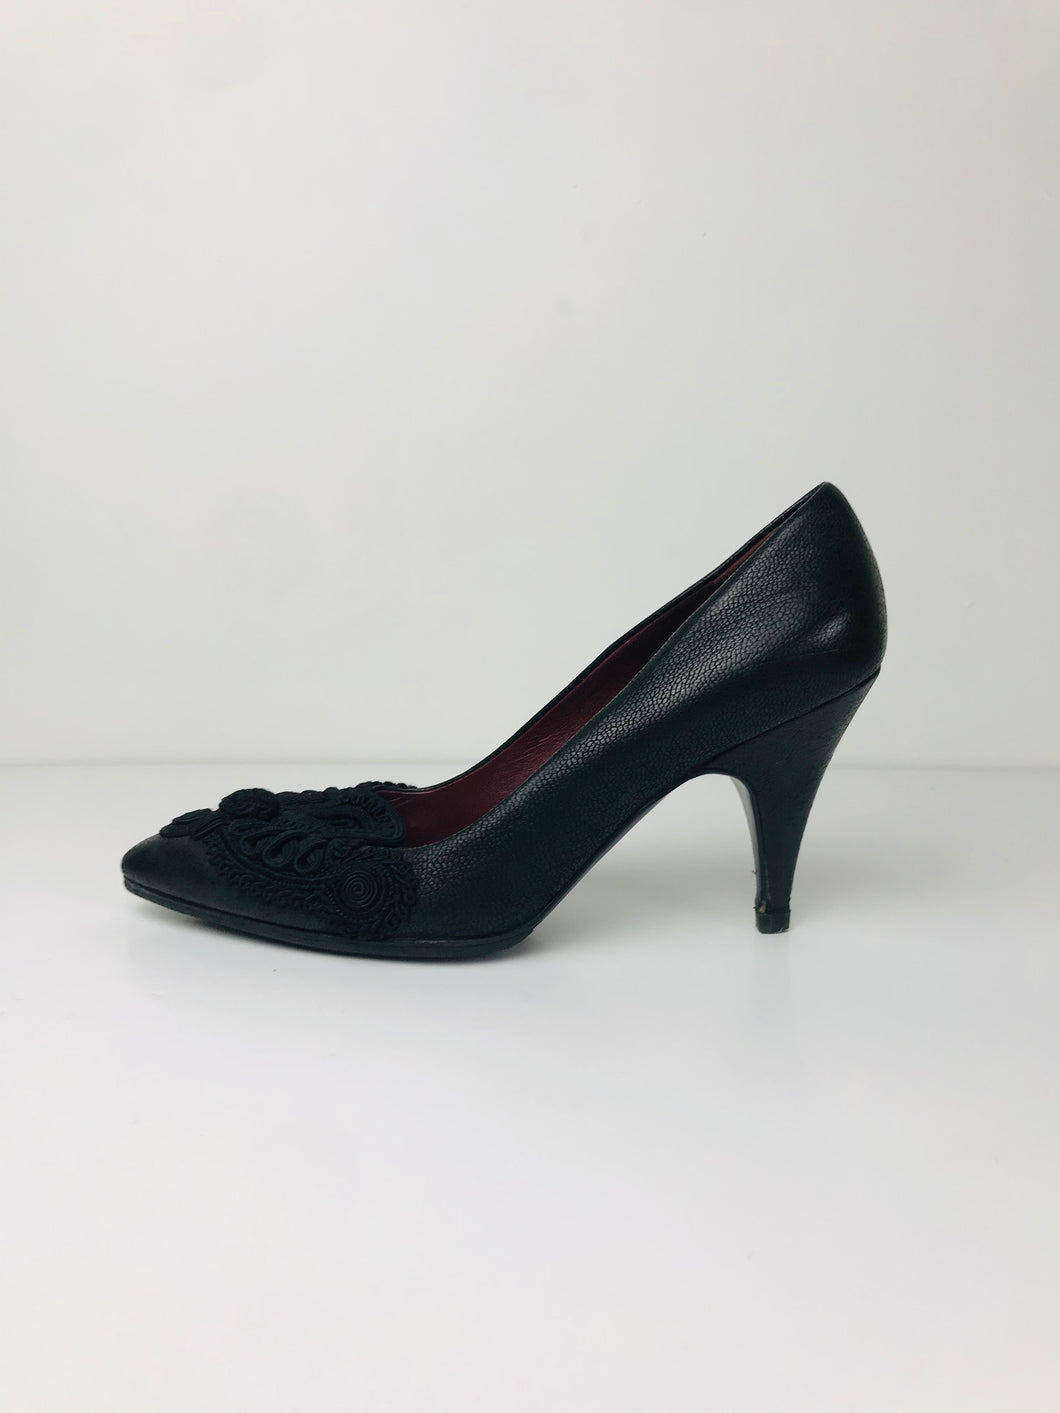 Prada Women's Leather Court Heels | 35.5 UK2.5 | Black